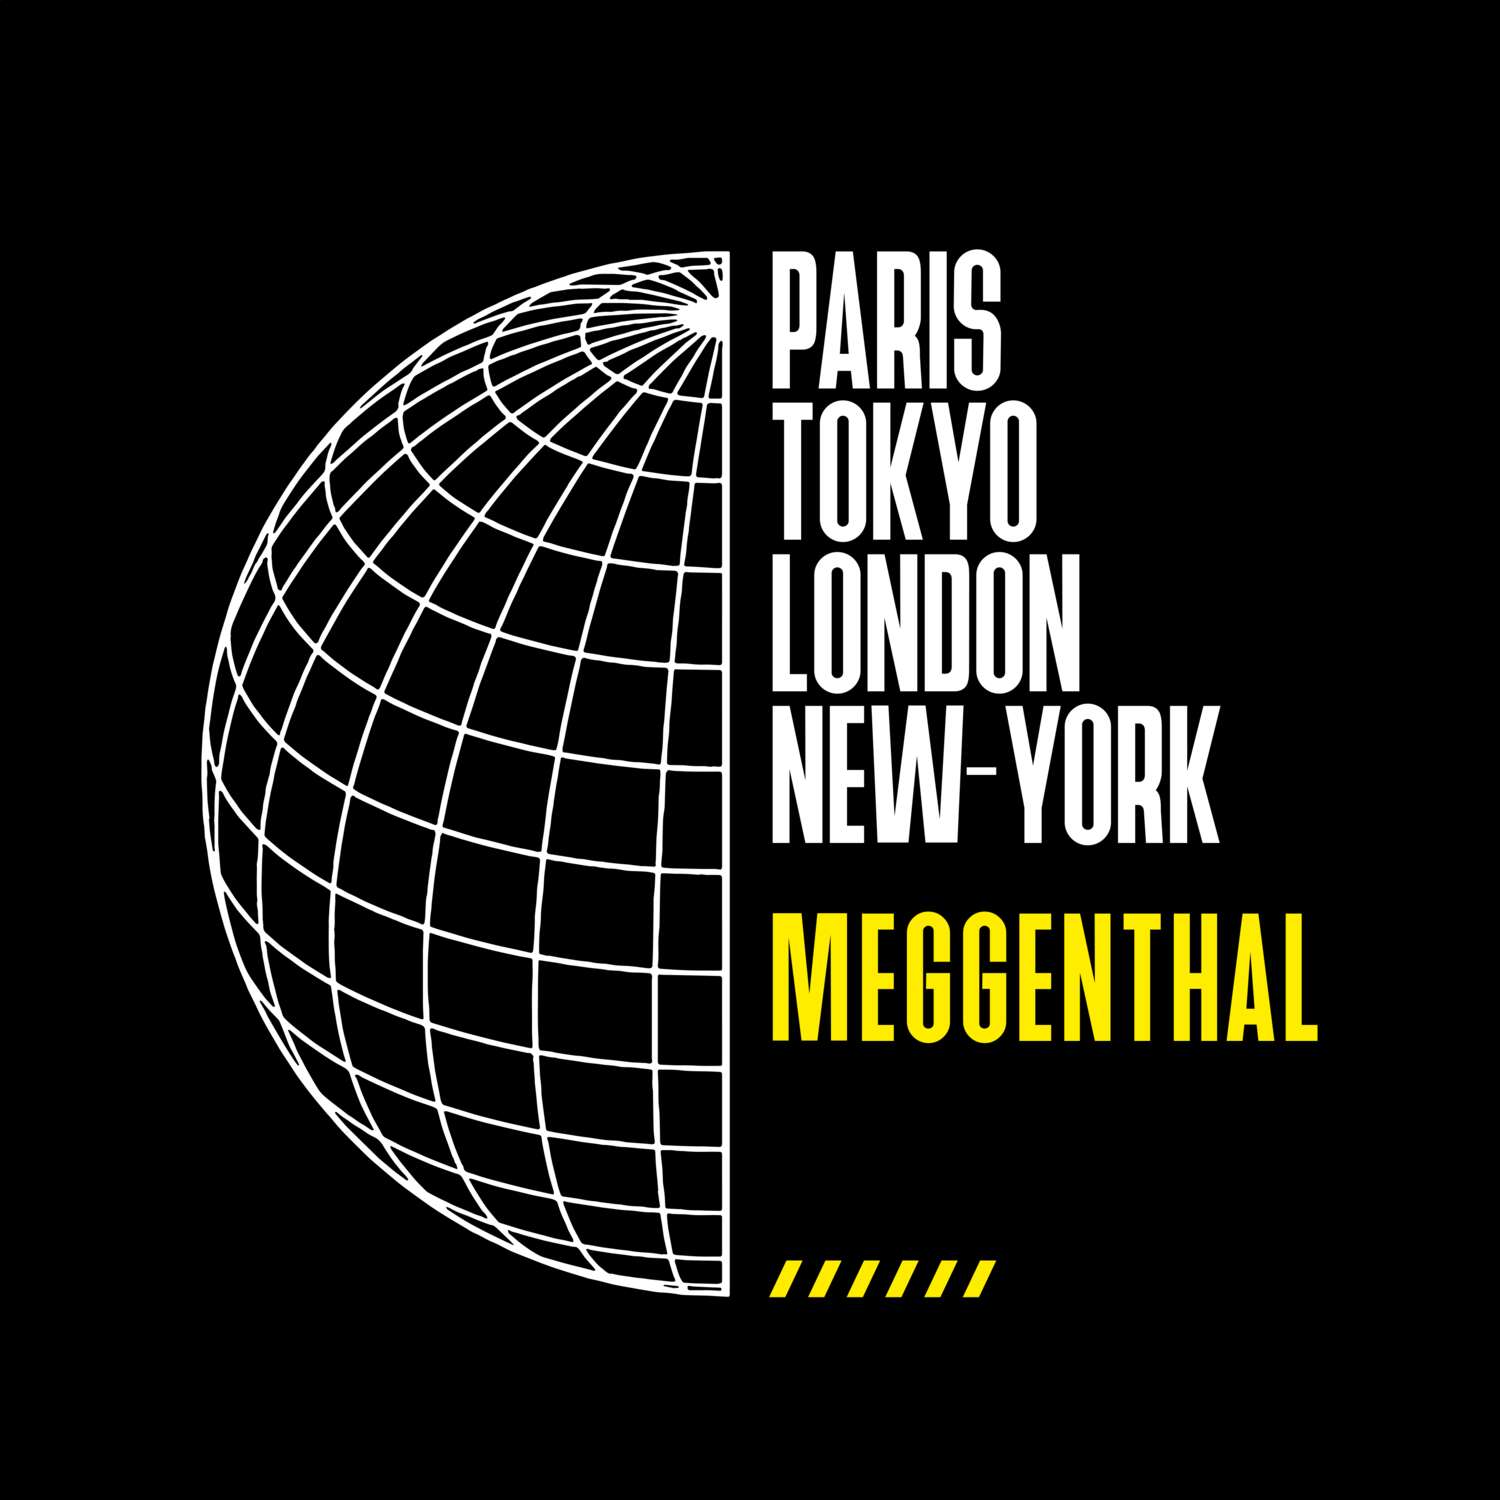 Meggenthal T-Shirt »Paris Tokyo London«